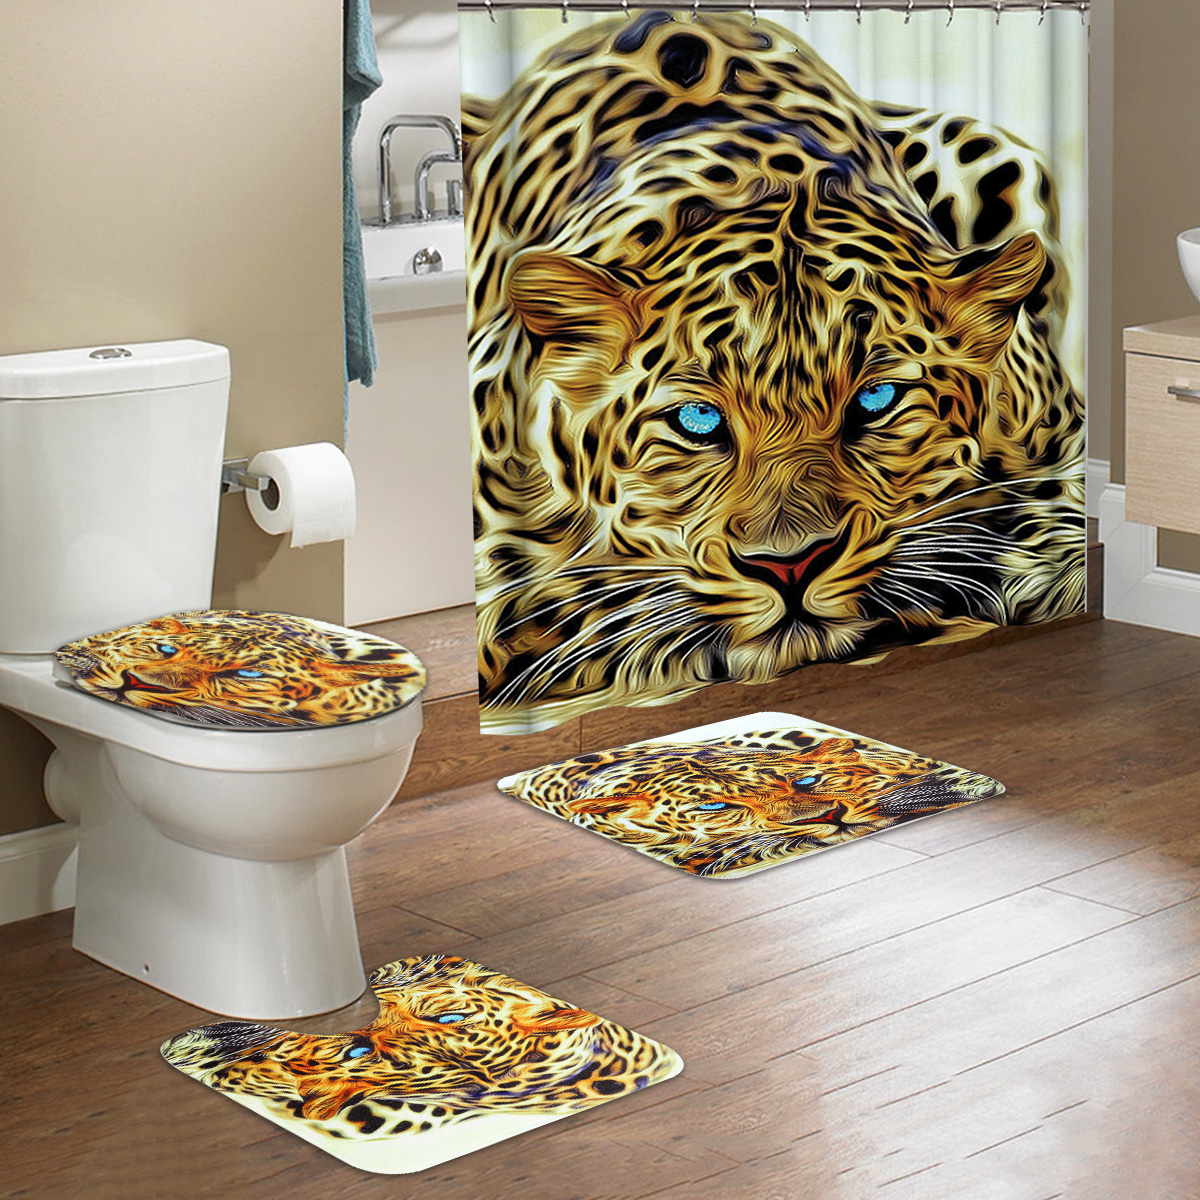 3PCS-Leopard-Panttern-Home-Bathroom-Anti-slip-Carpet-Pad-Rug-Toilet-Seat-Covers-Mat-Set-1426723-1